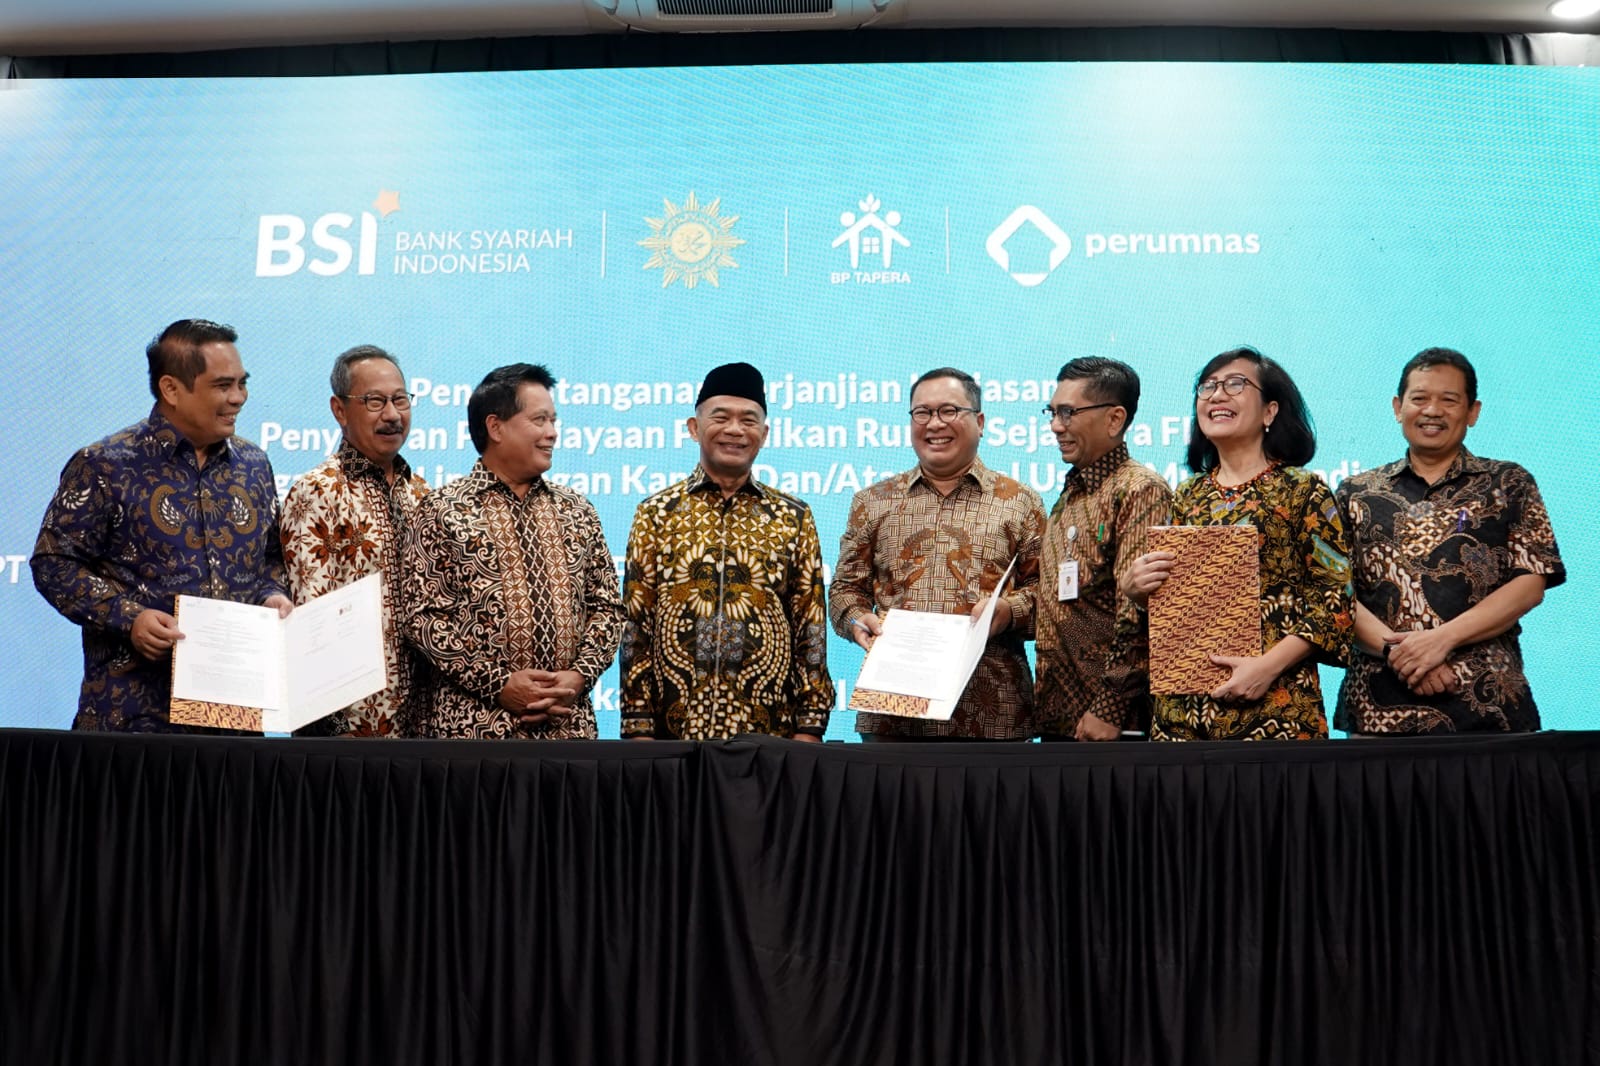 BSI, PP Muhammadiyah, BP Tapera, dan Perumnas Berkolaborasi Penyaluran KPR Syariah